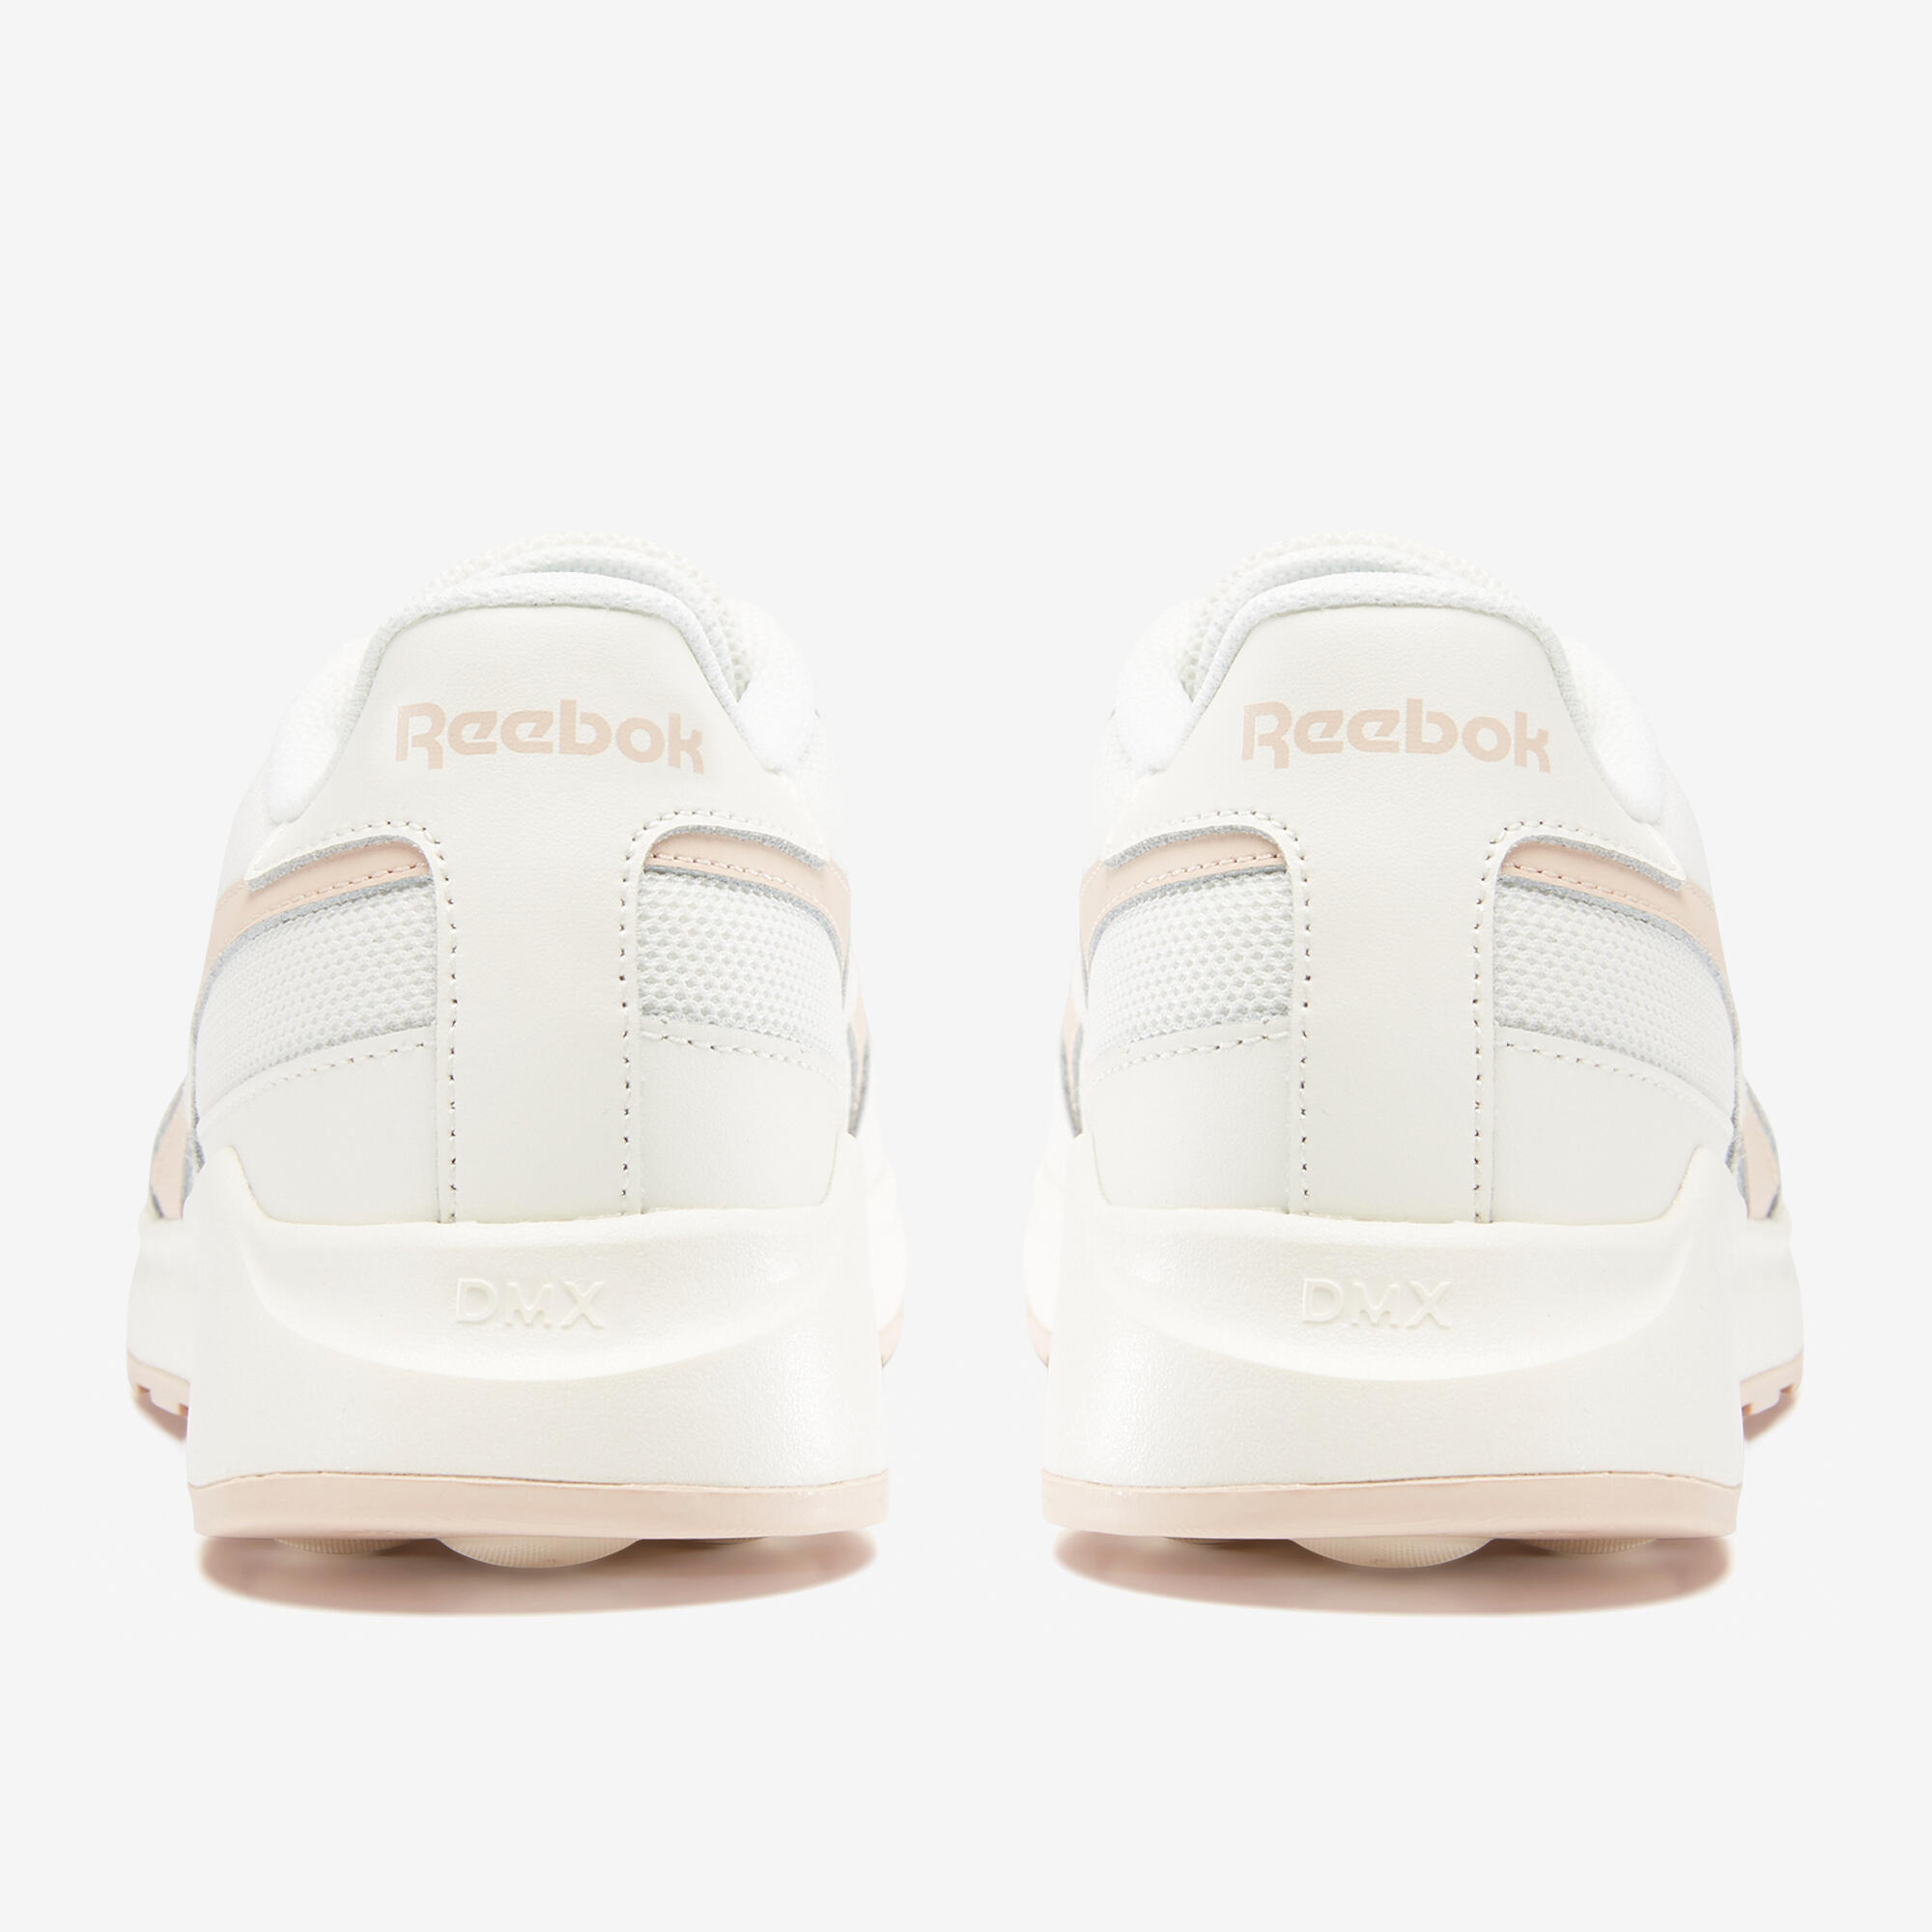 Reebok Classic DMX Urban Walking Shoes - White/Beige 3/7